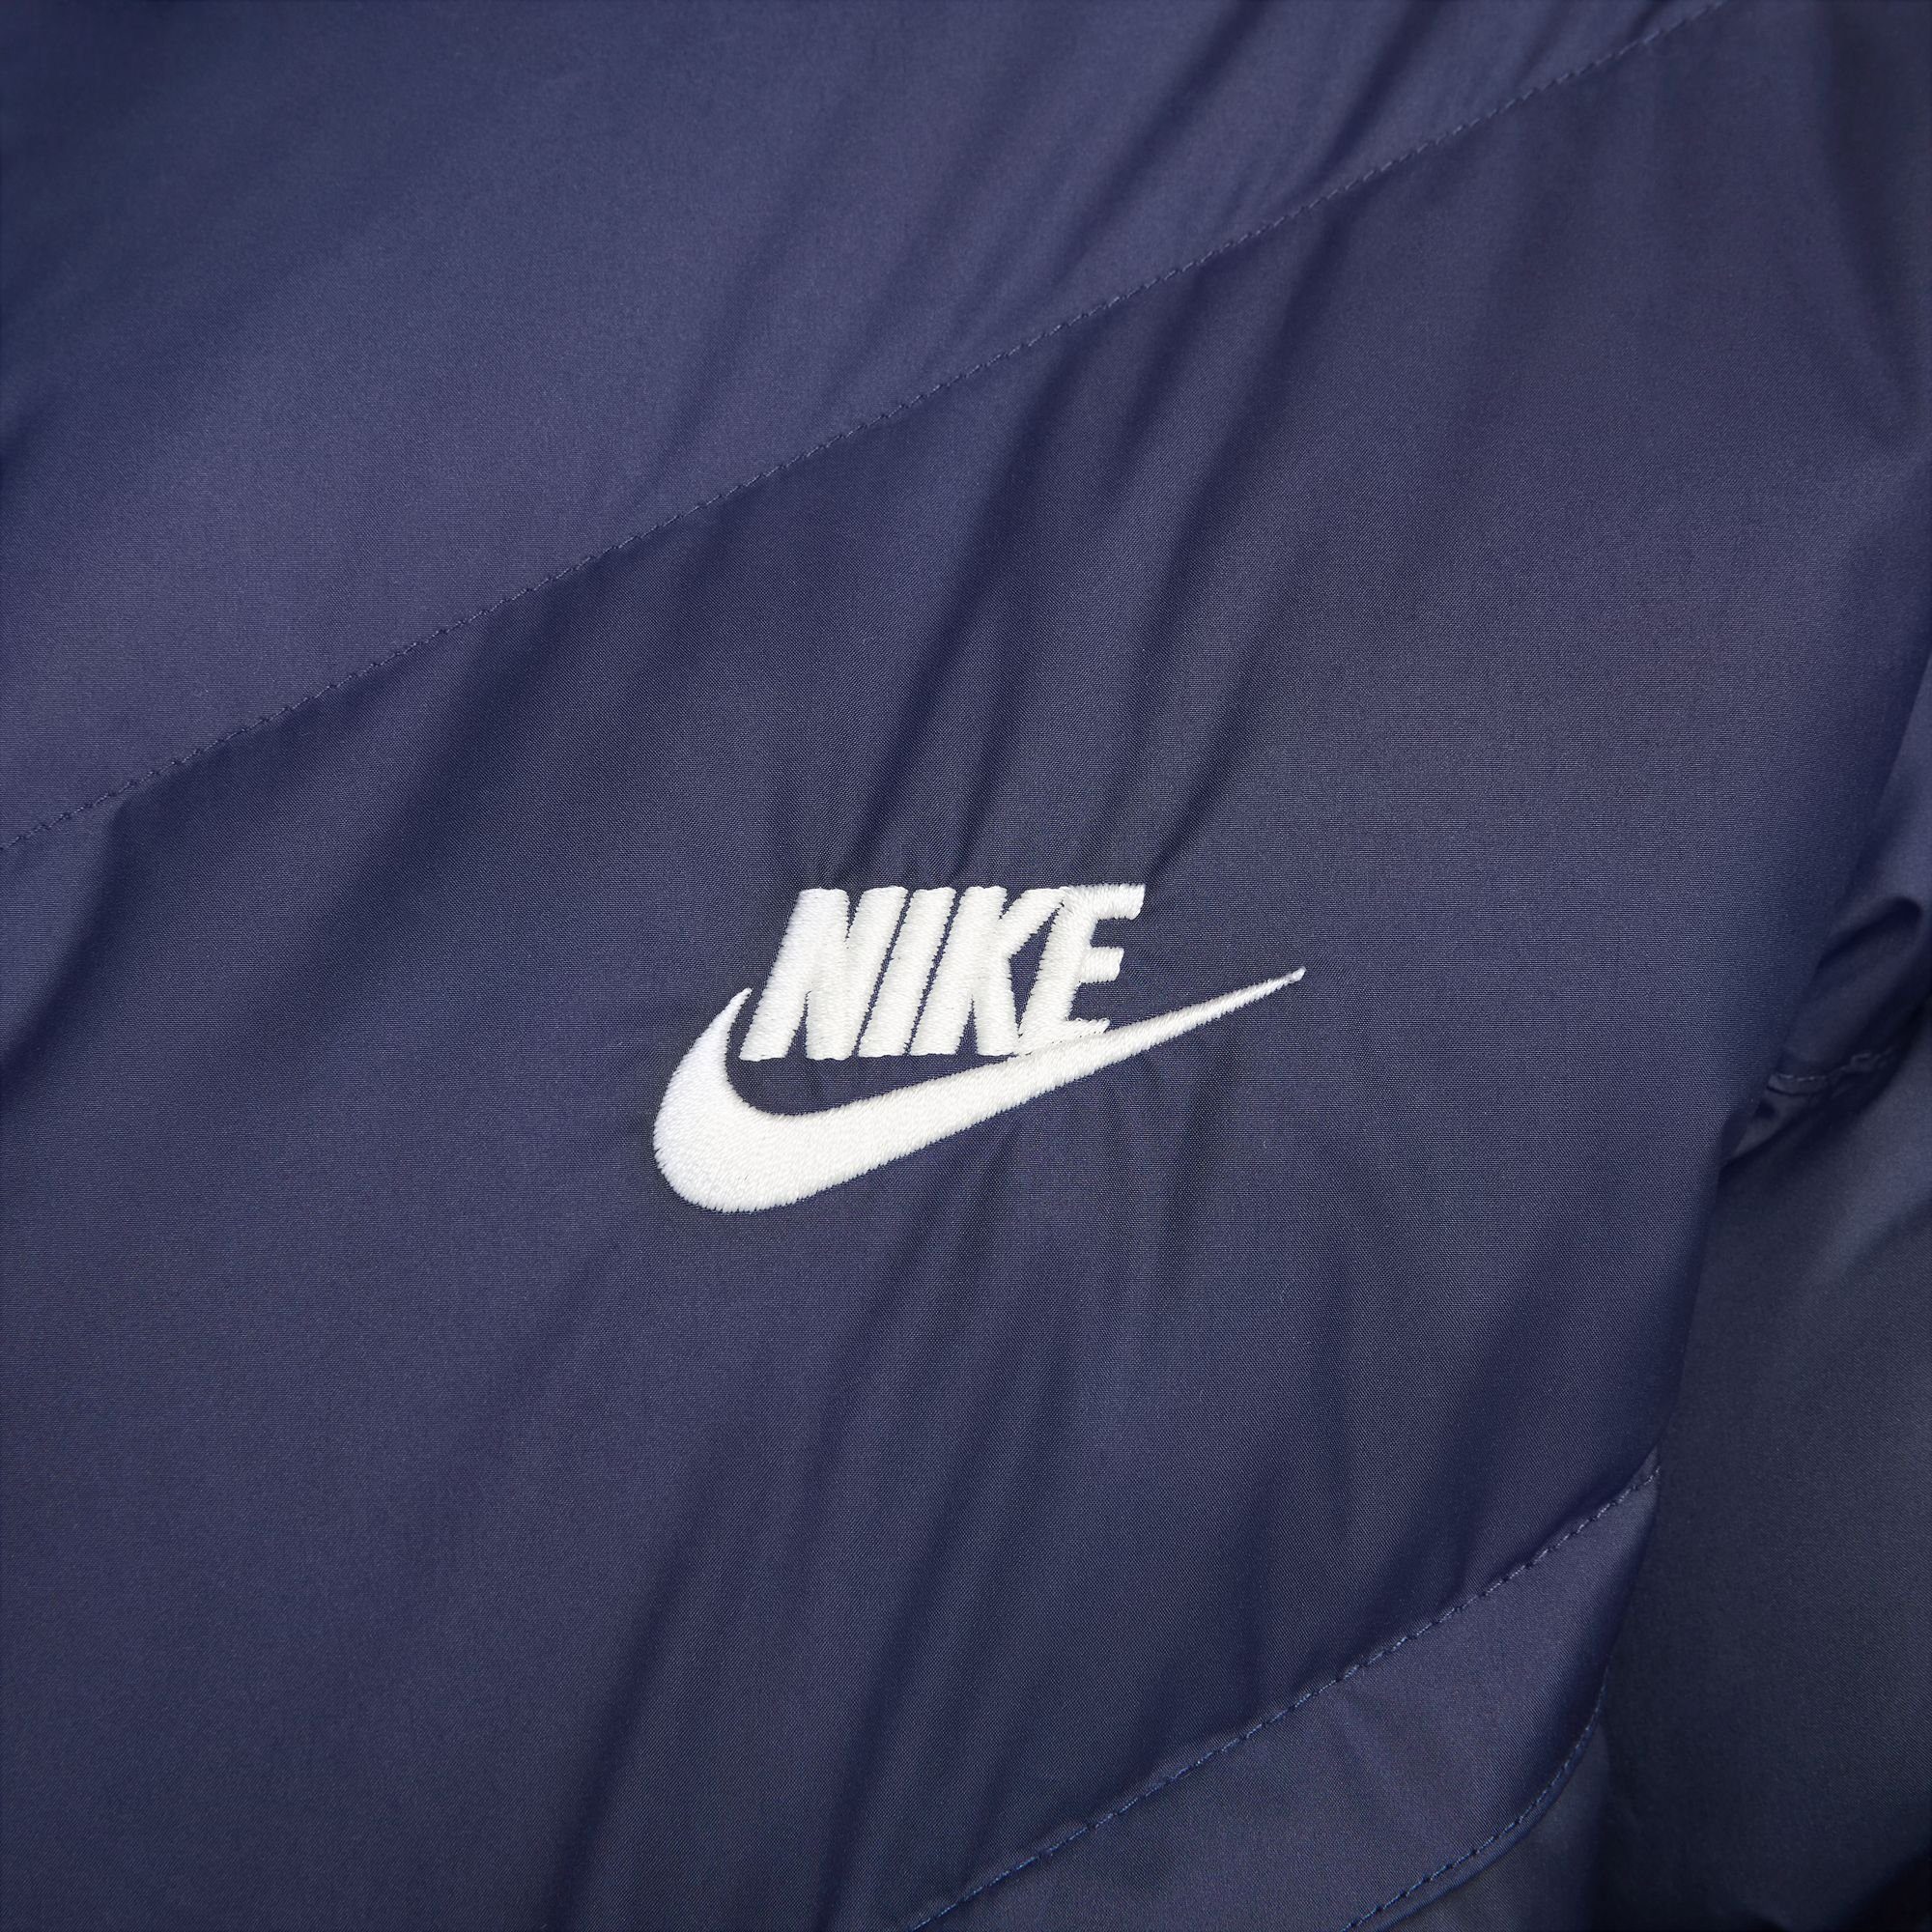 Nike Sportswear Windbreaker STORM-FIT WINDRUNNER JACKET MEN'S NAVY/OBSIDIAN/SAIL MIDNIGHT INSULATED HOODED